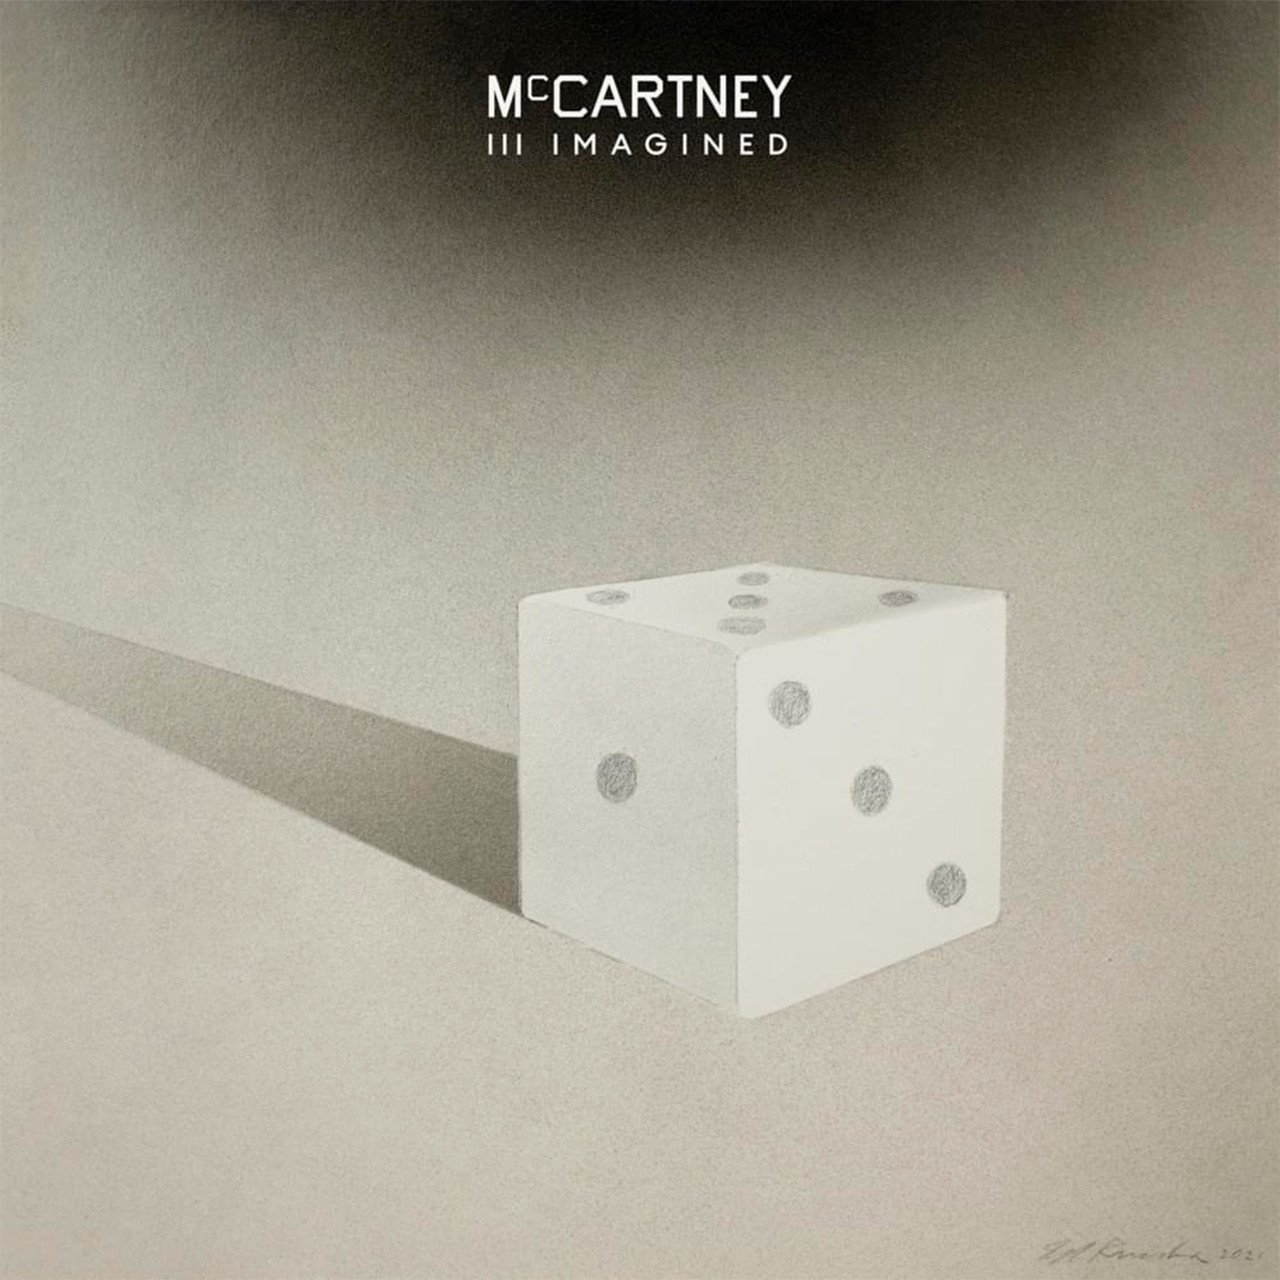 Рок Capitol US Paul McCartney - McCartney III Imagined